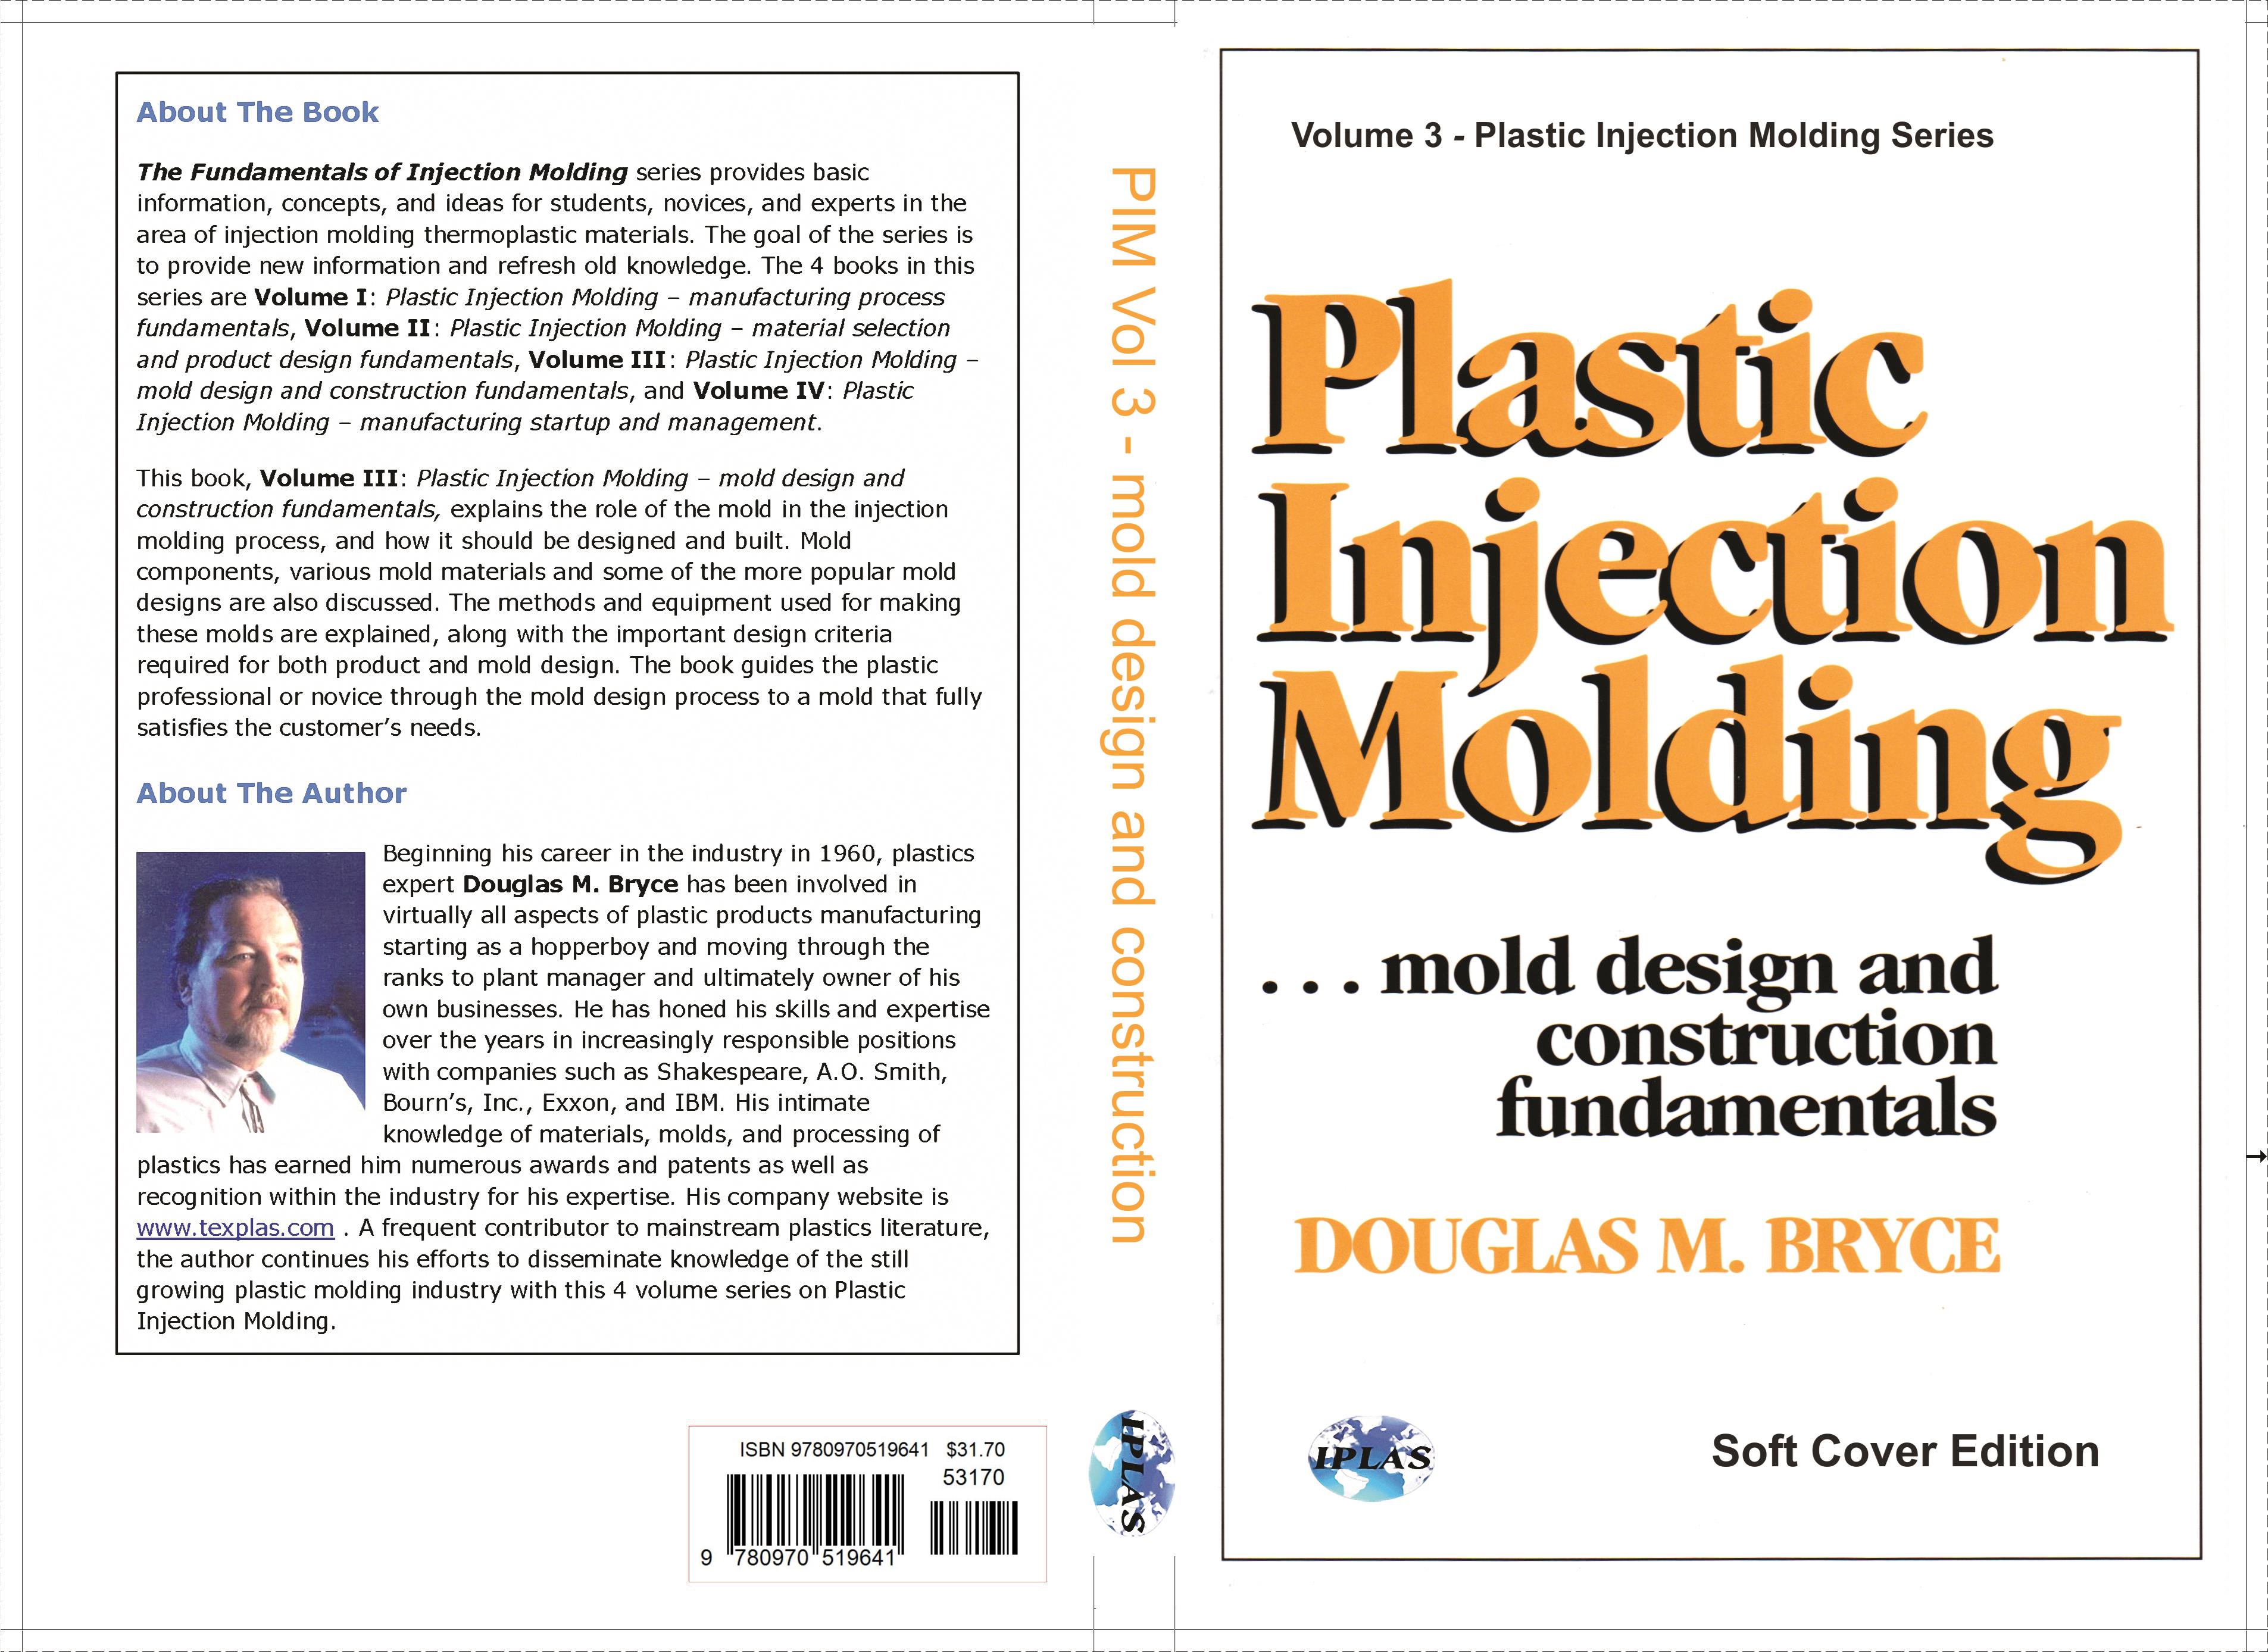 PIM Volume 3 - Mold Design and Construction Fundamentals cover image